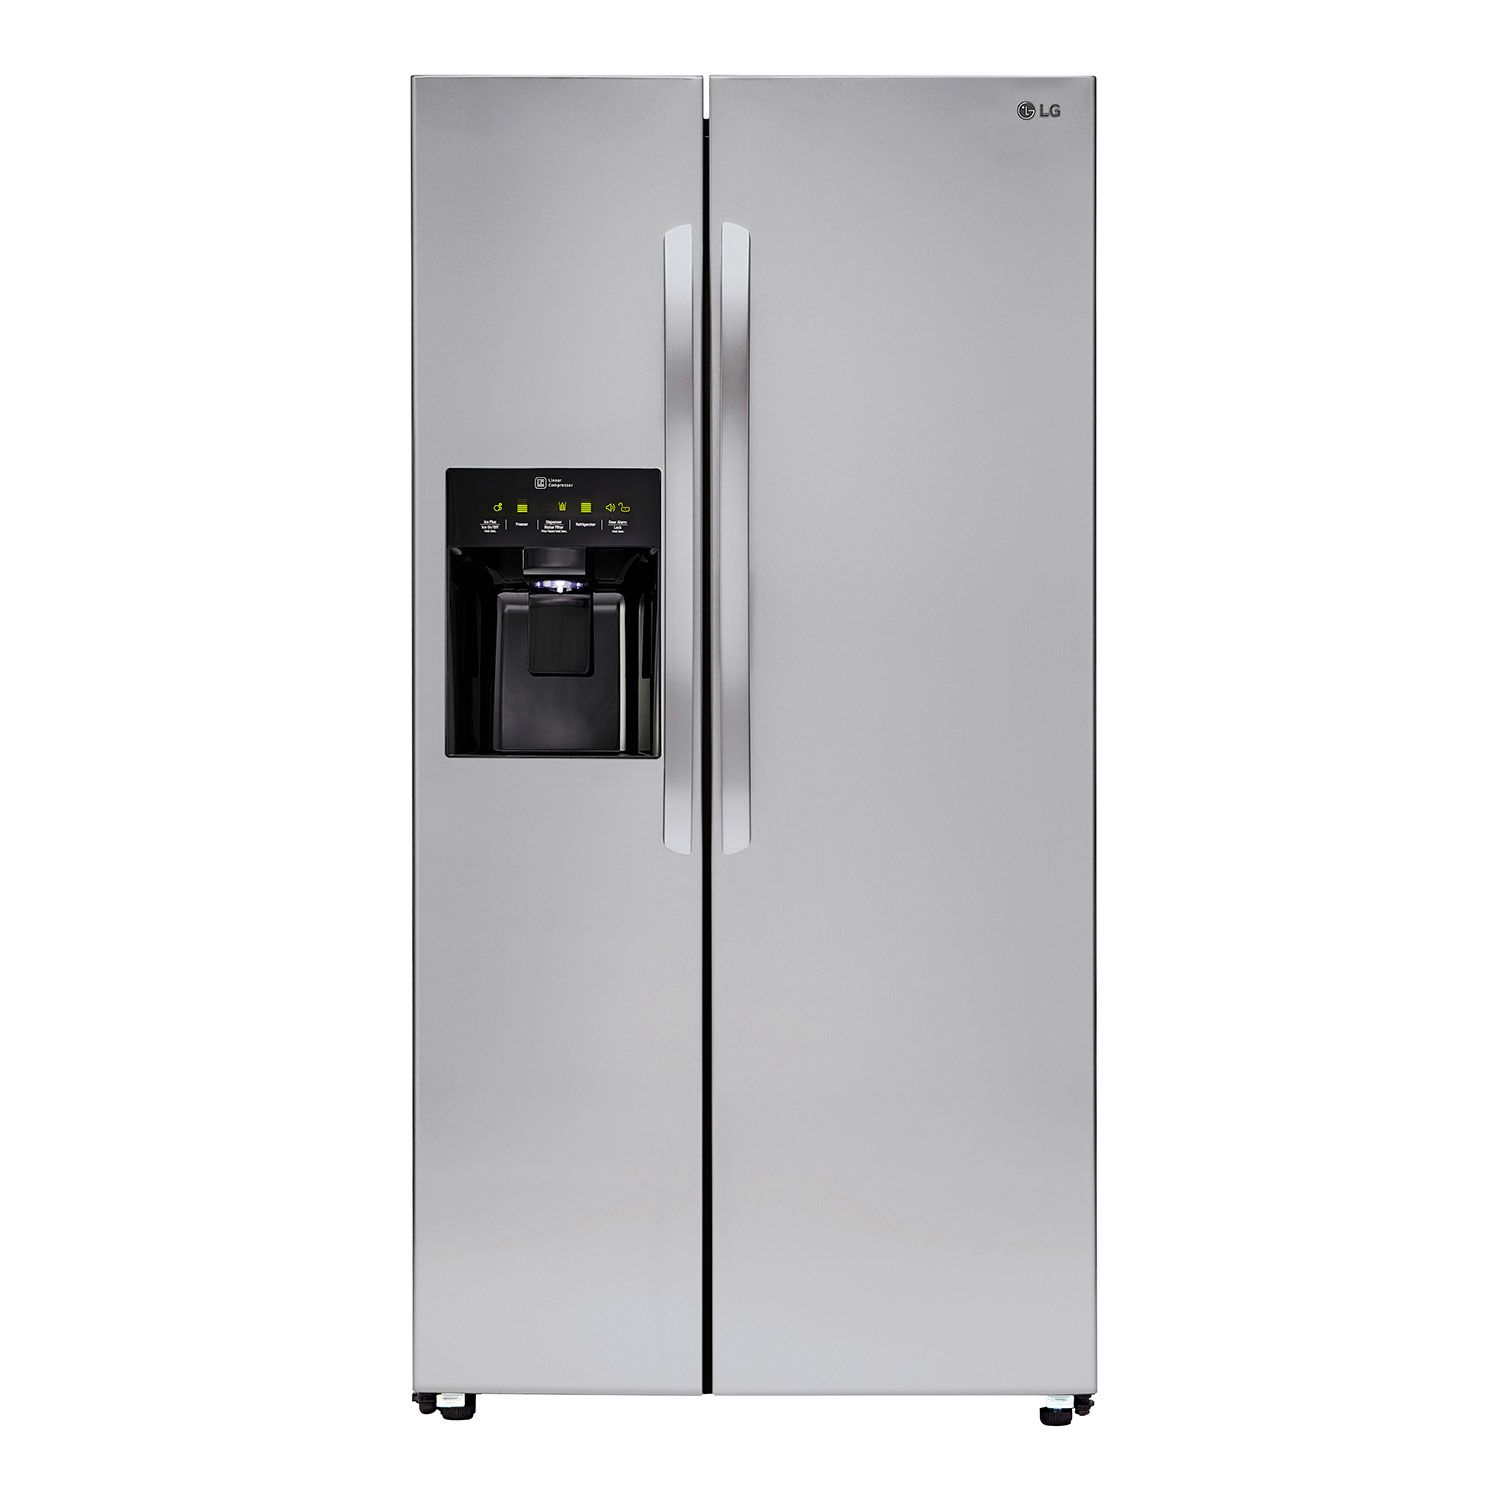 LG LSXS26336S 26 Cu ft Ultra-Capacity Side-by-Side Refrigerator